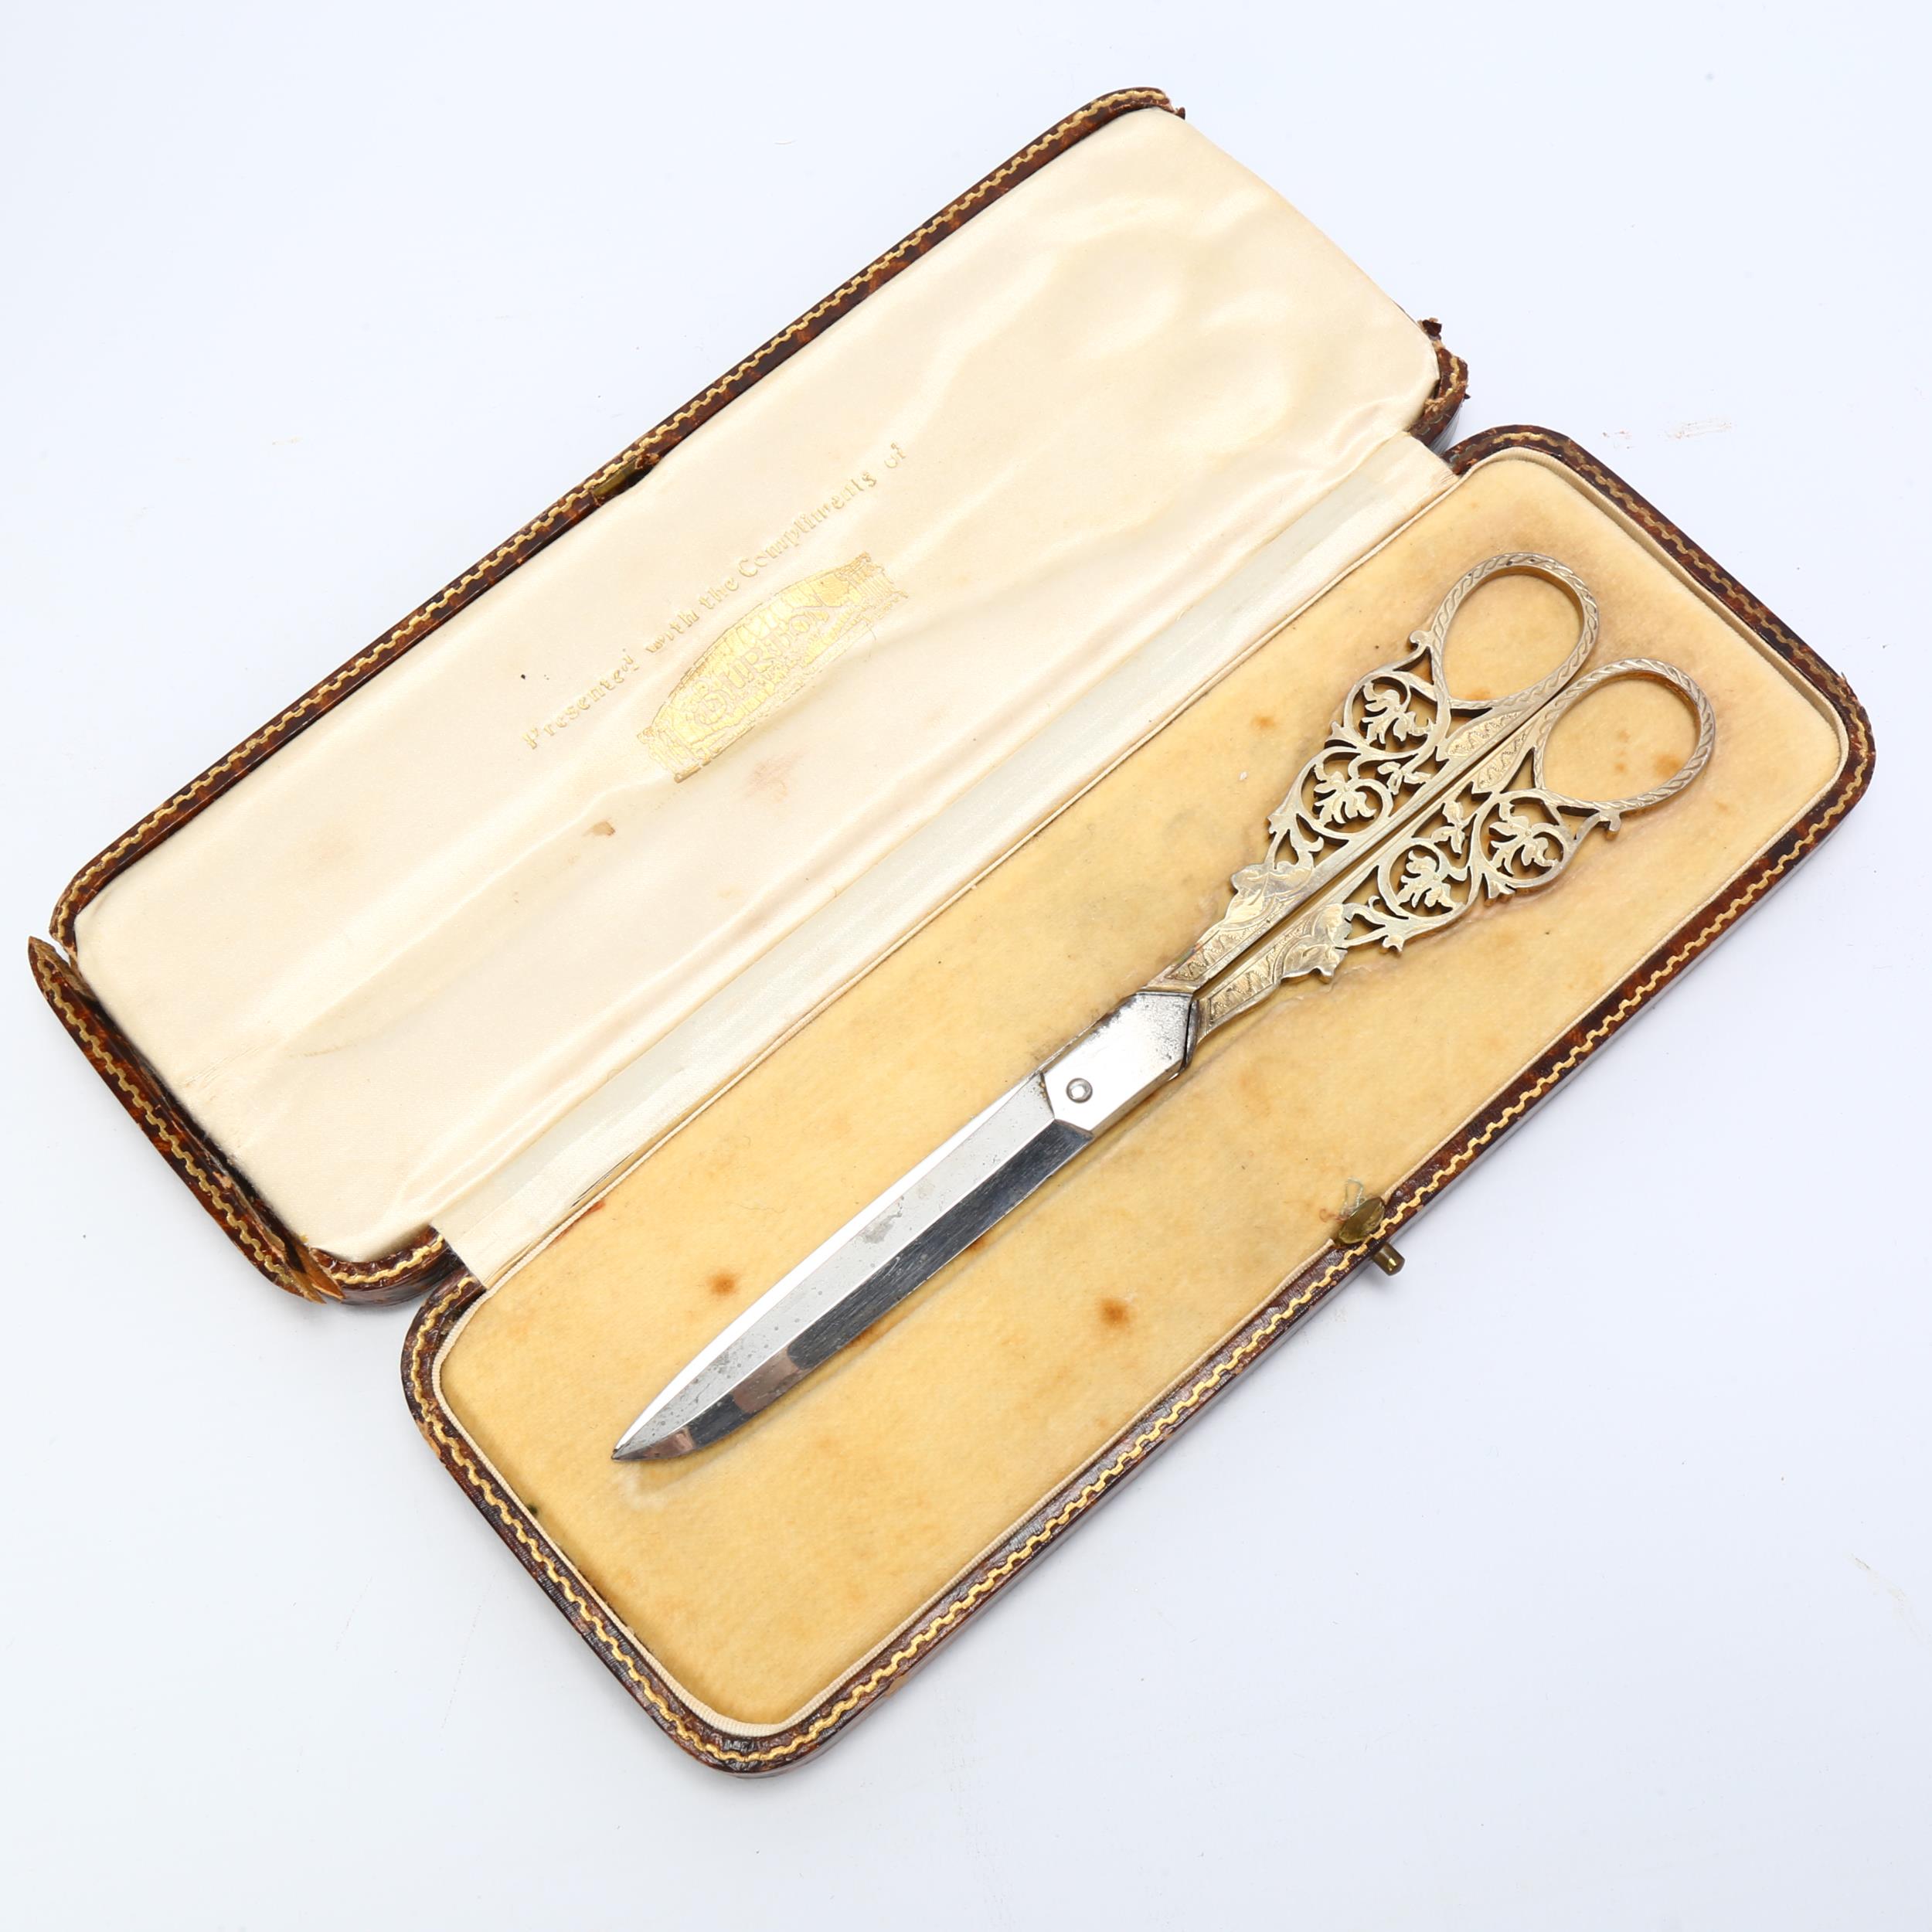 A cased pair of Edward VIII silver-gilt presentation scissors, Viner's Ltd, Sheffield 1936, - Image 3 of 3